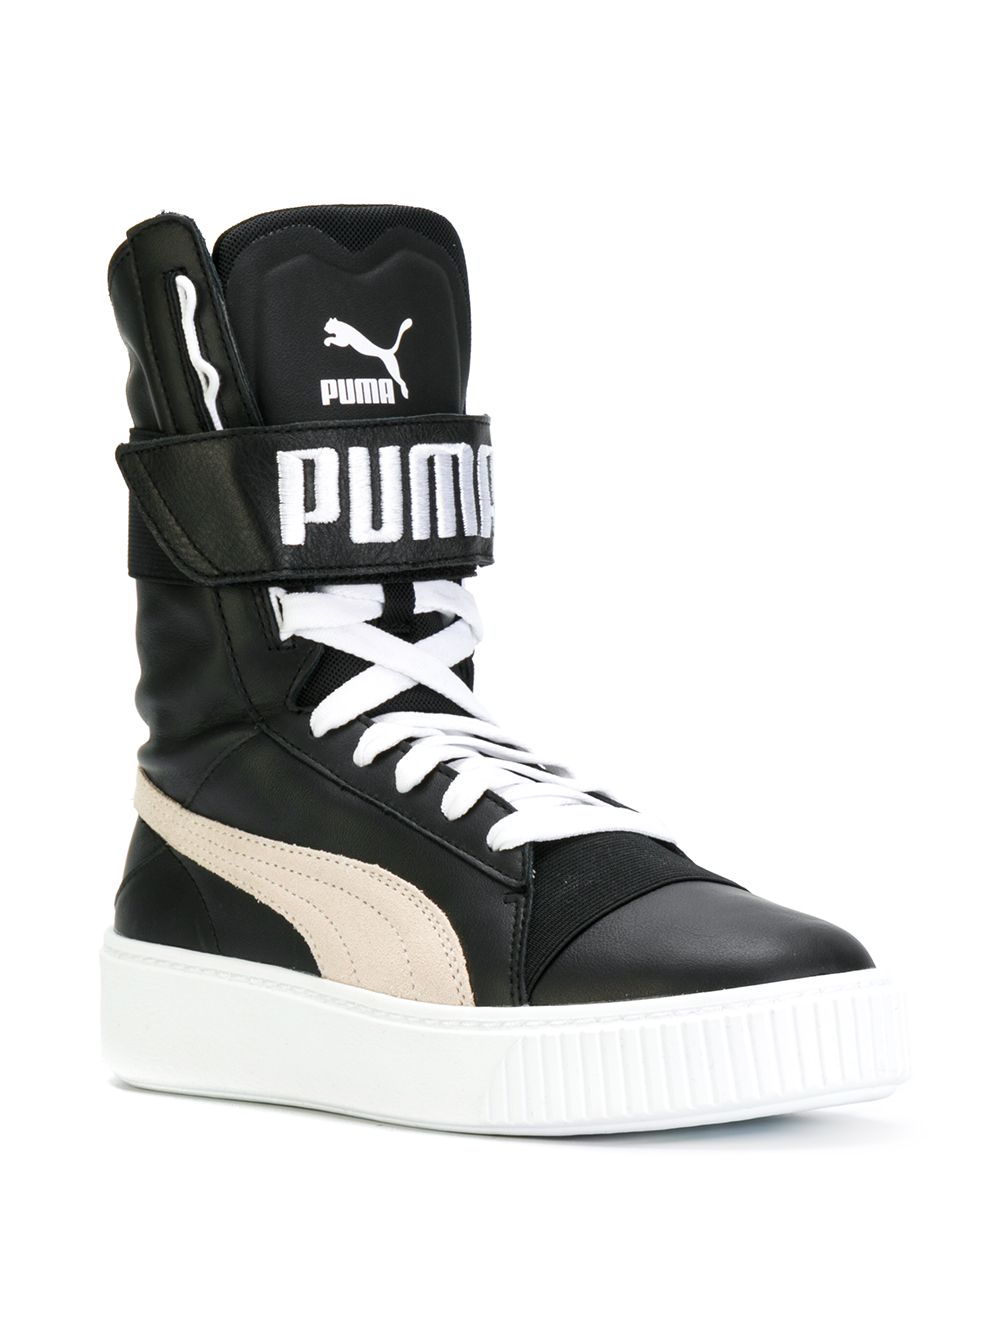 puma wedge sneakers australia